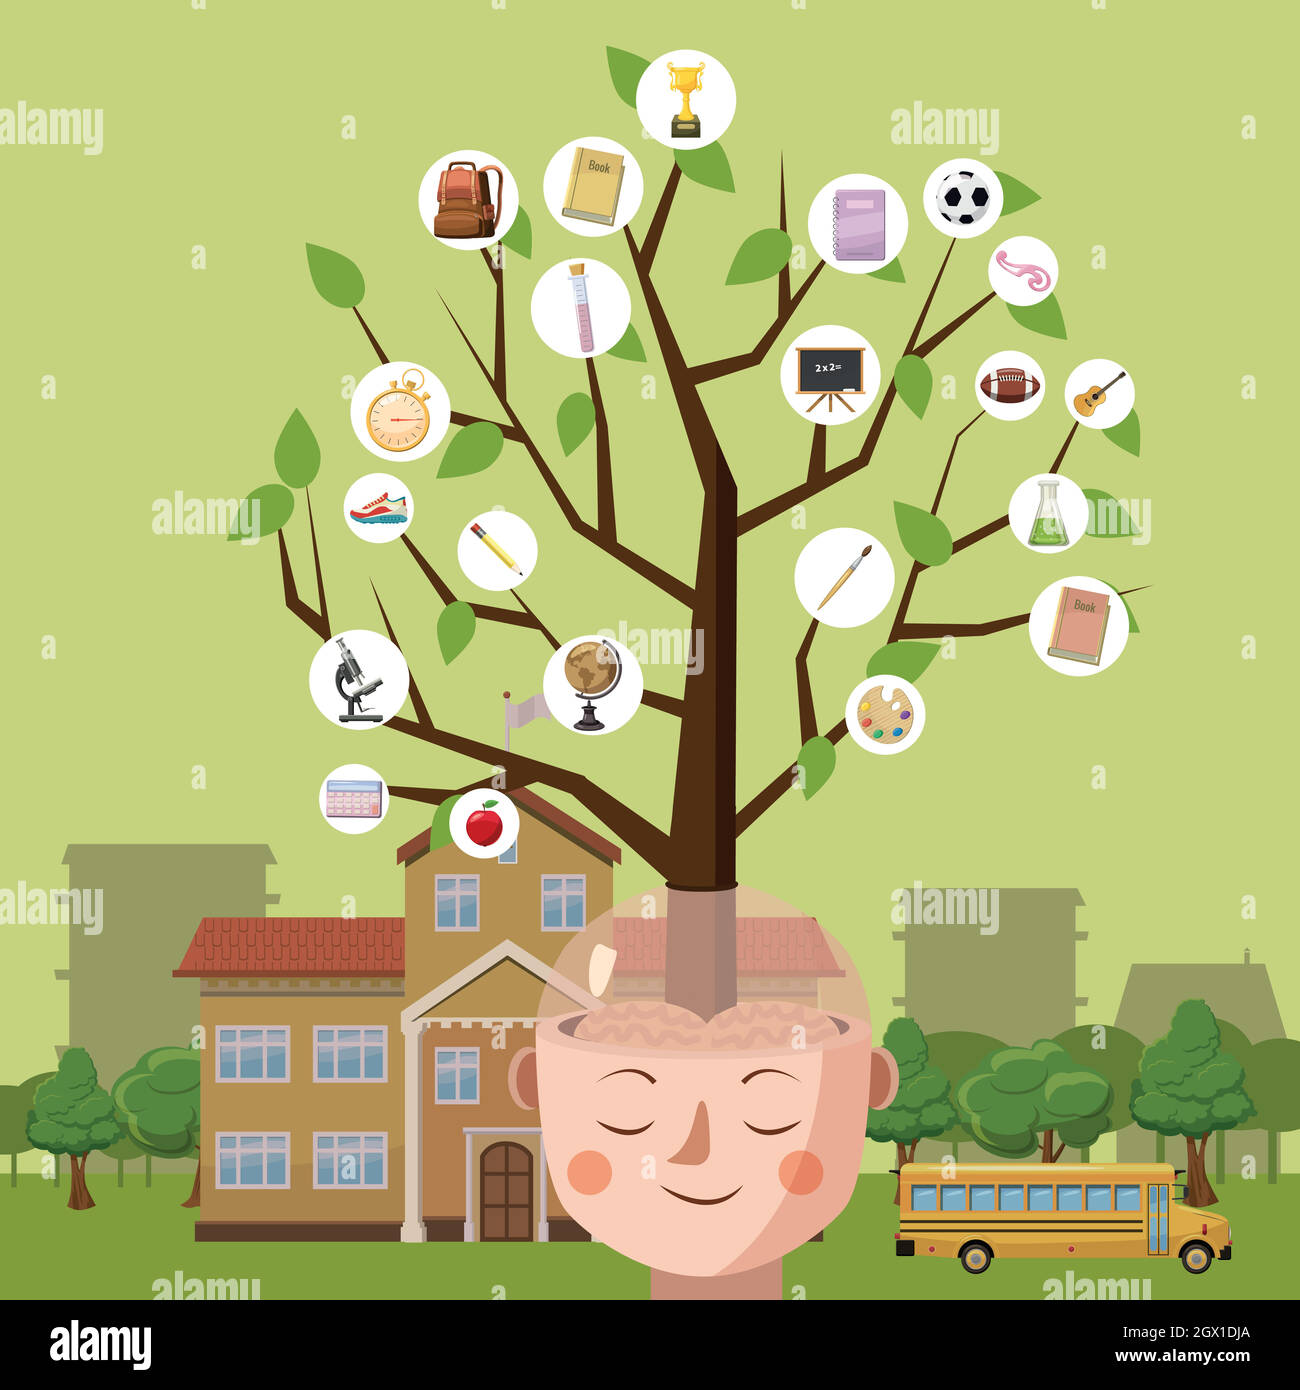 Education concept brain tree, cartoon style Stock Vector